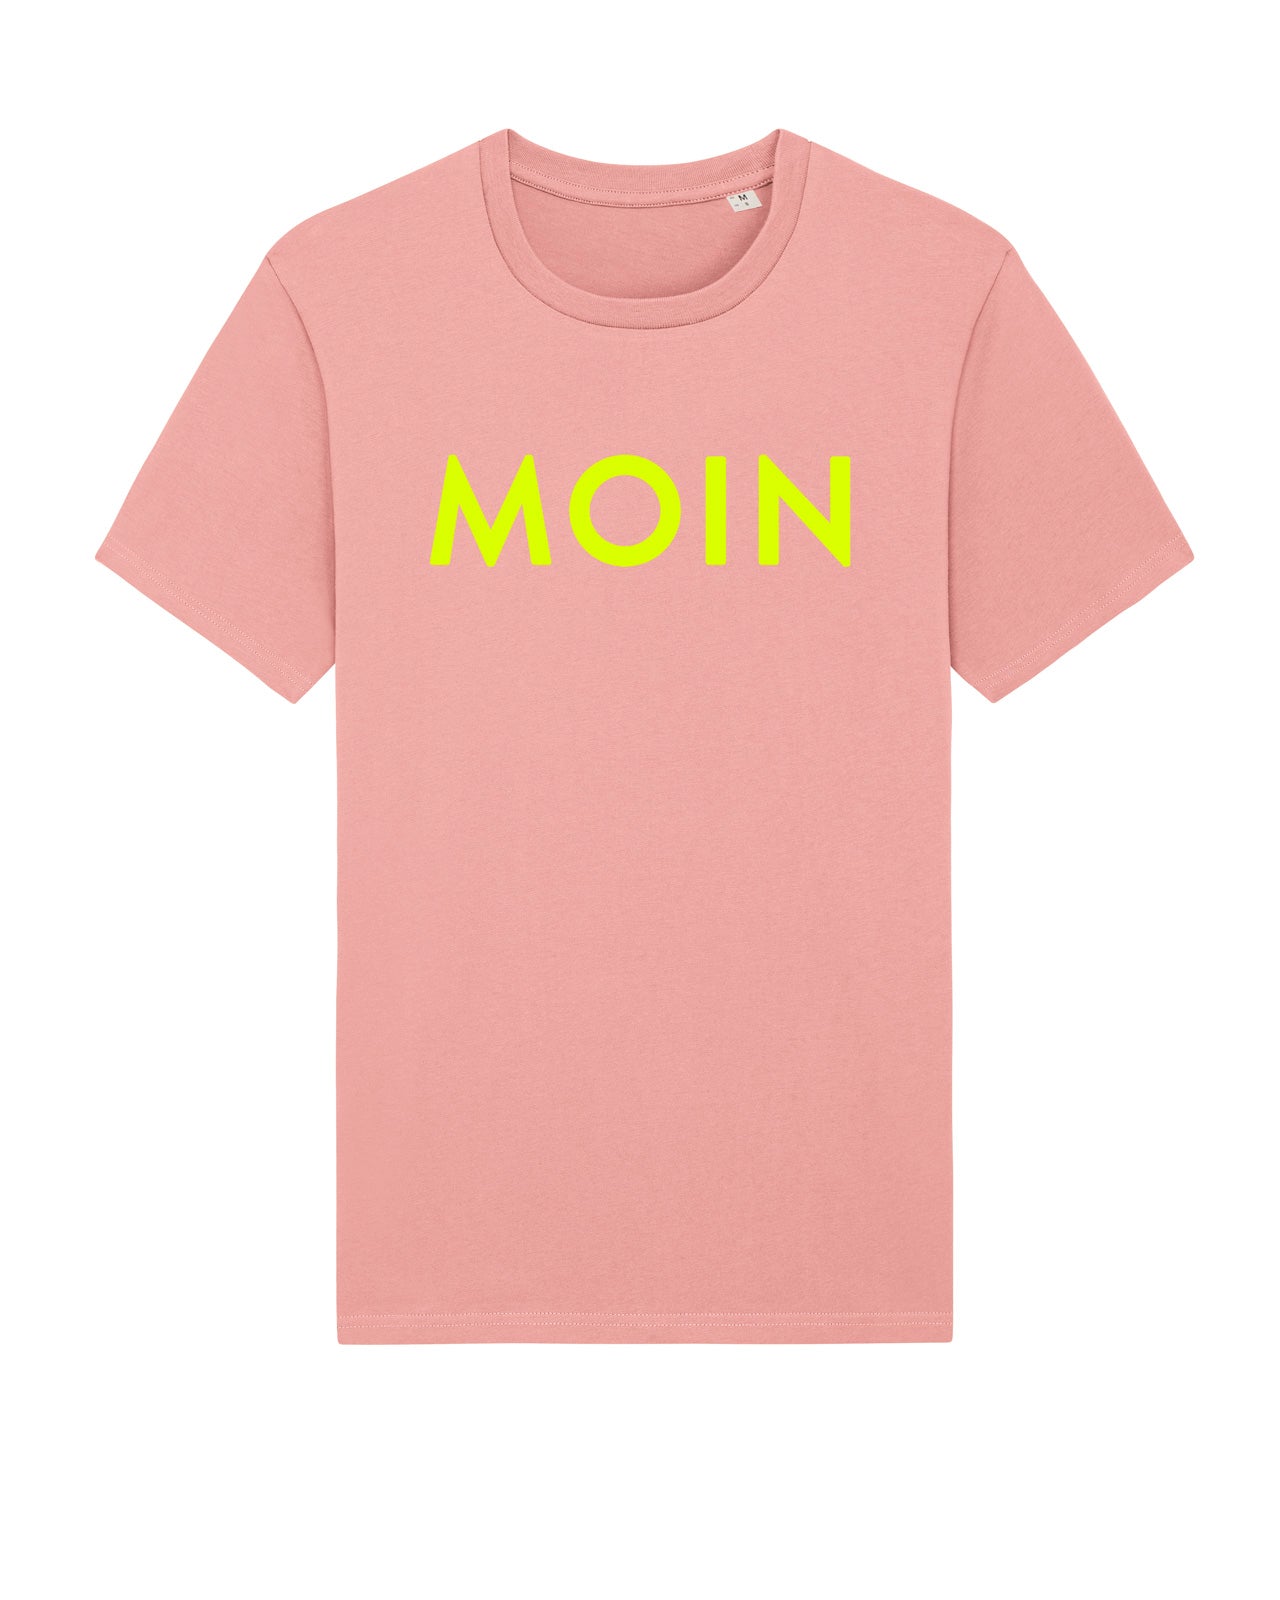 T-Shirt "Moin" Canyon Pink/Neongelb